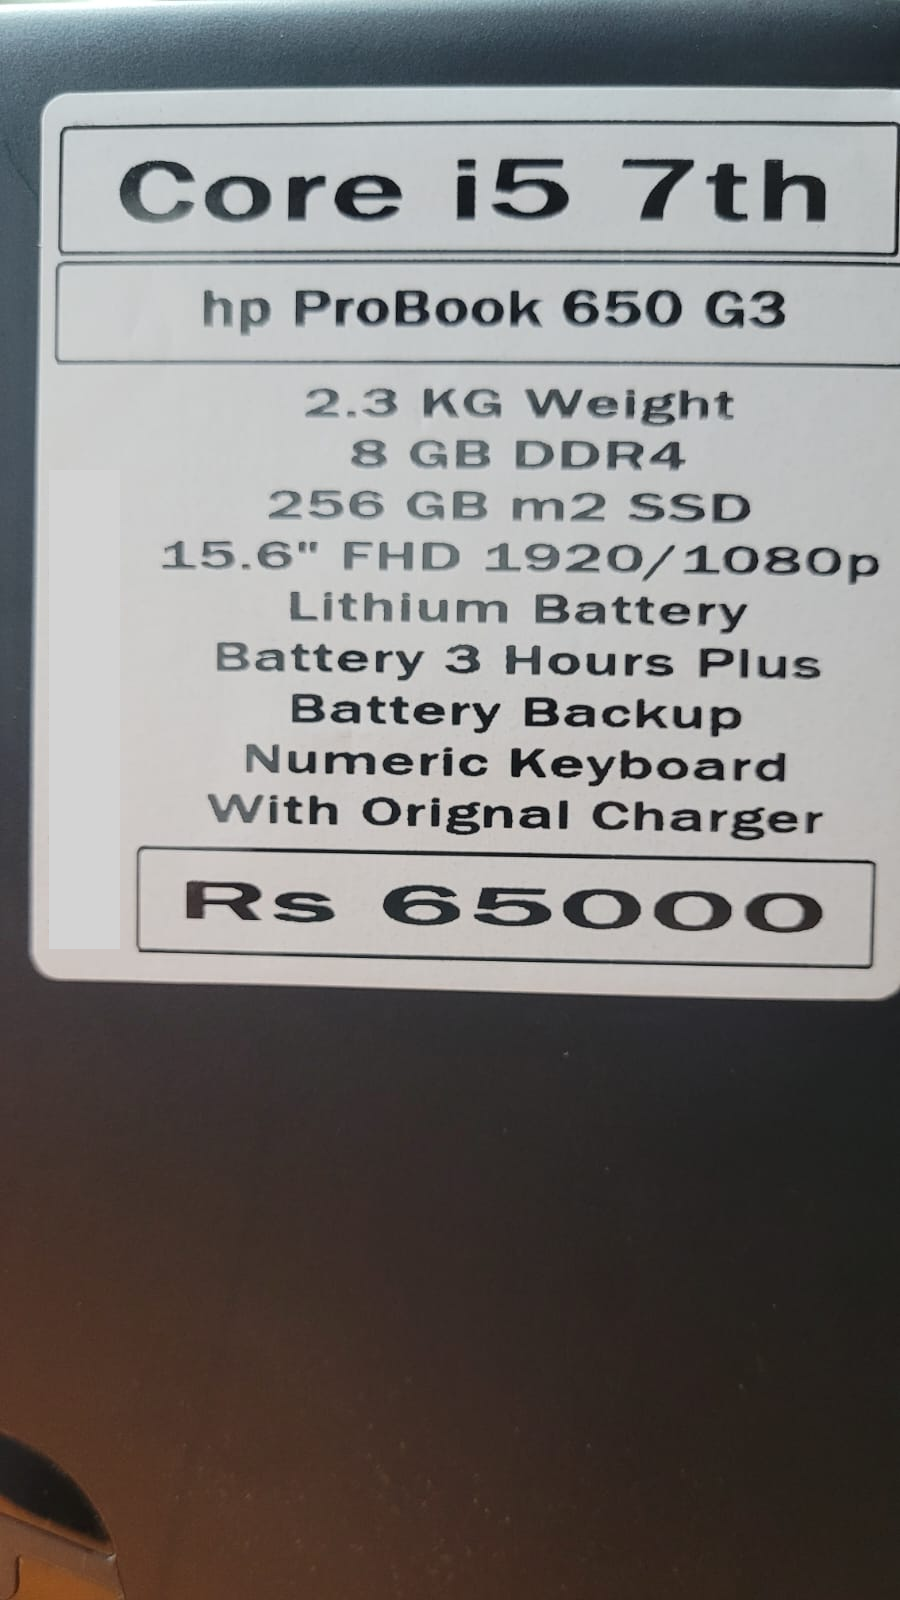 hp core i5 7th generation ProBook 650 G3 laptop price in pakistan